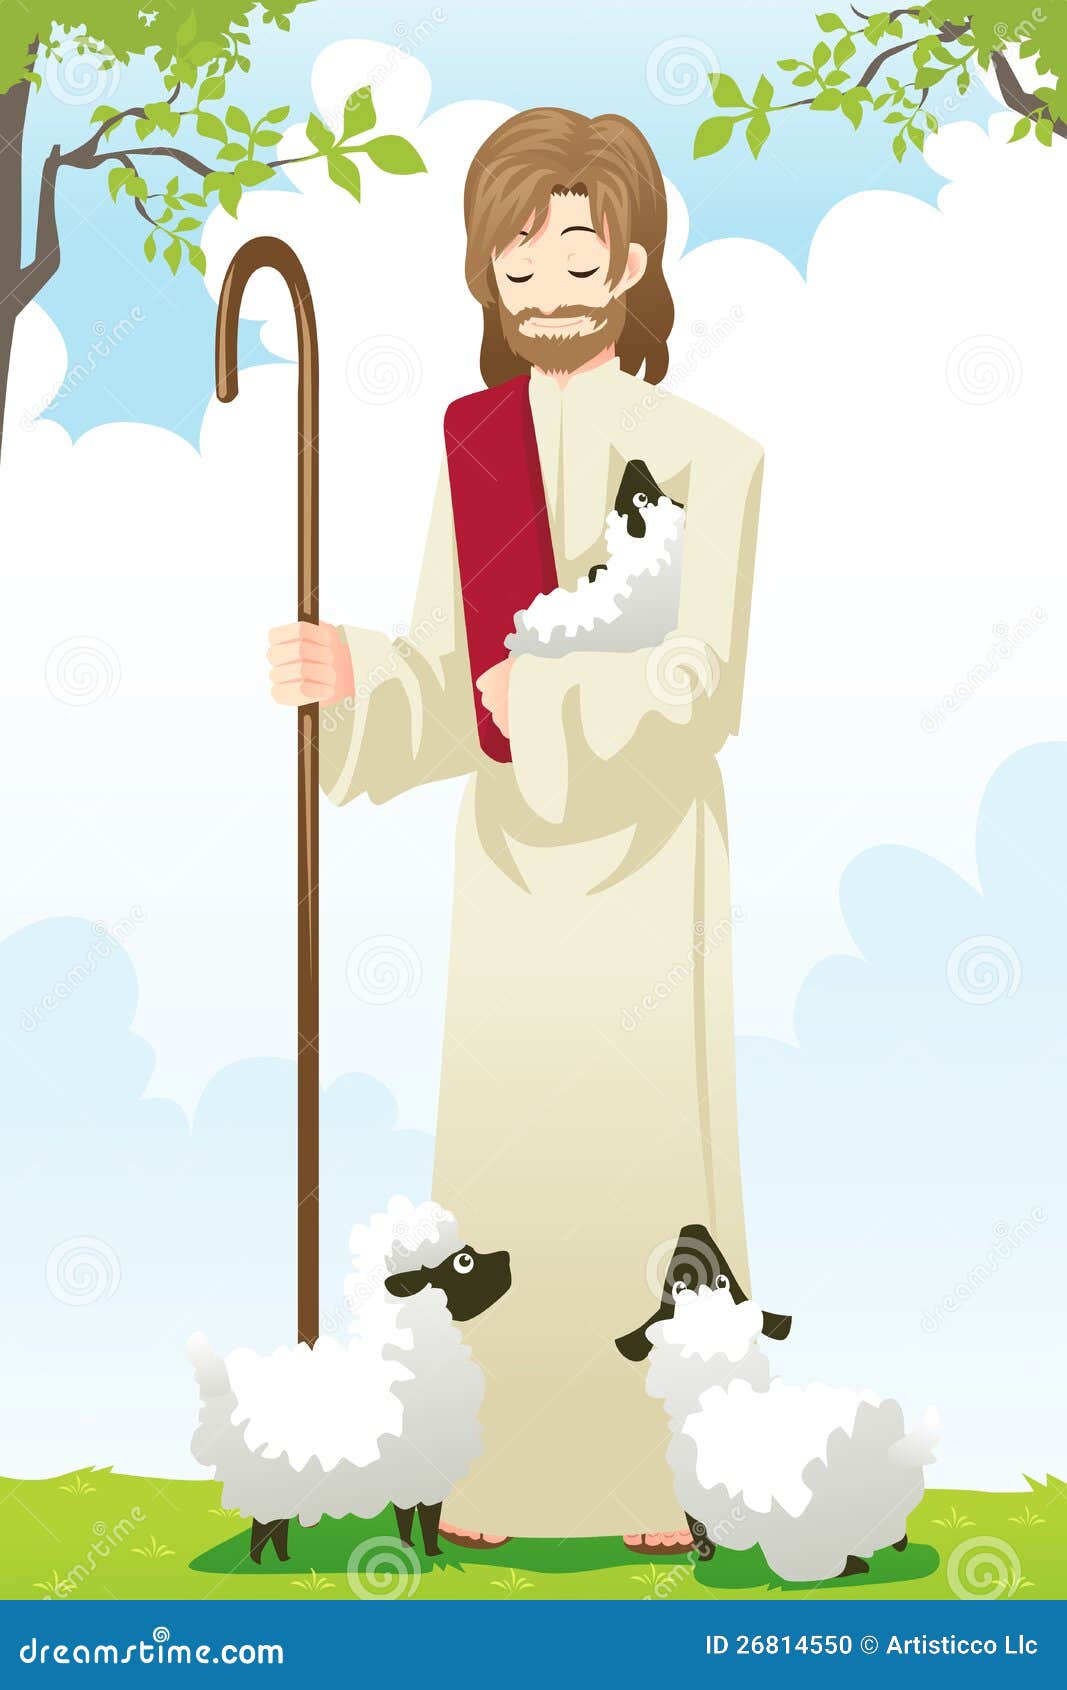 clipart of jesus the good shepherd - photo #27